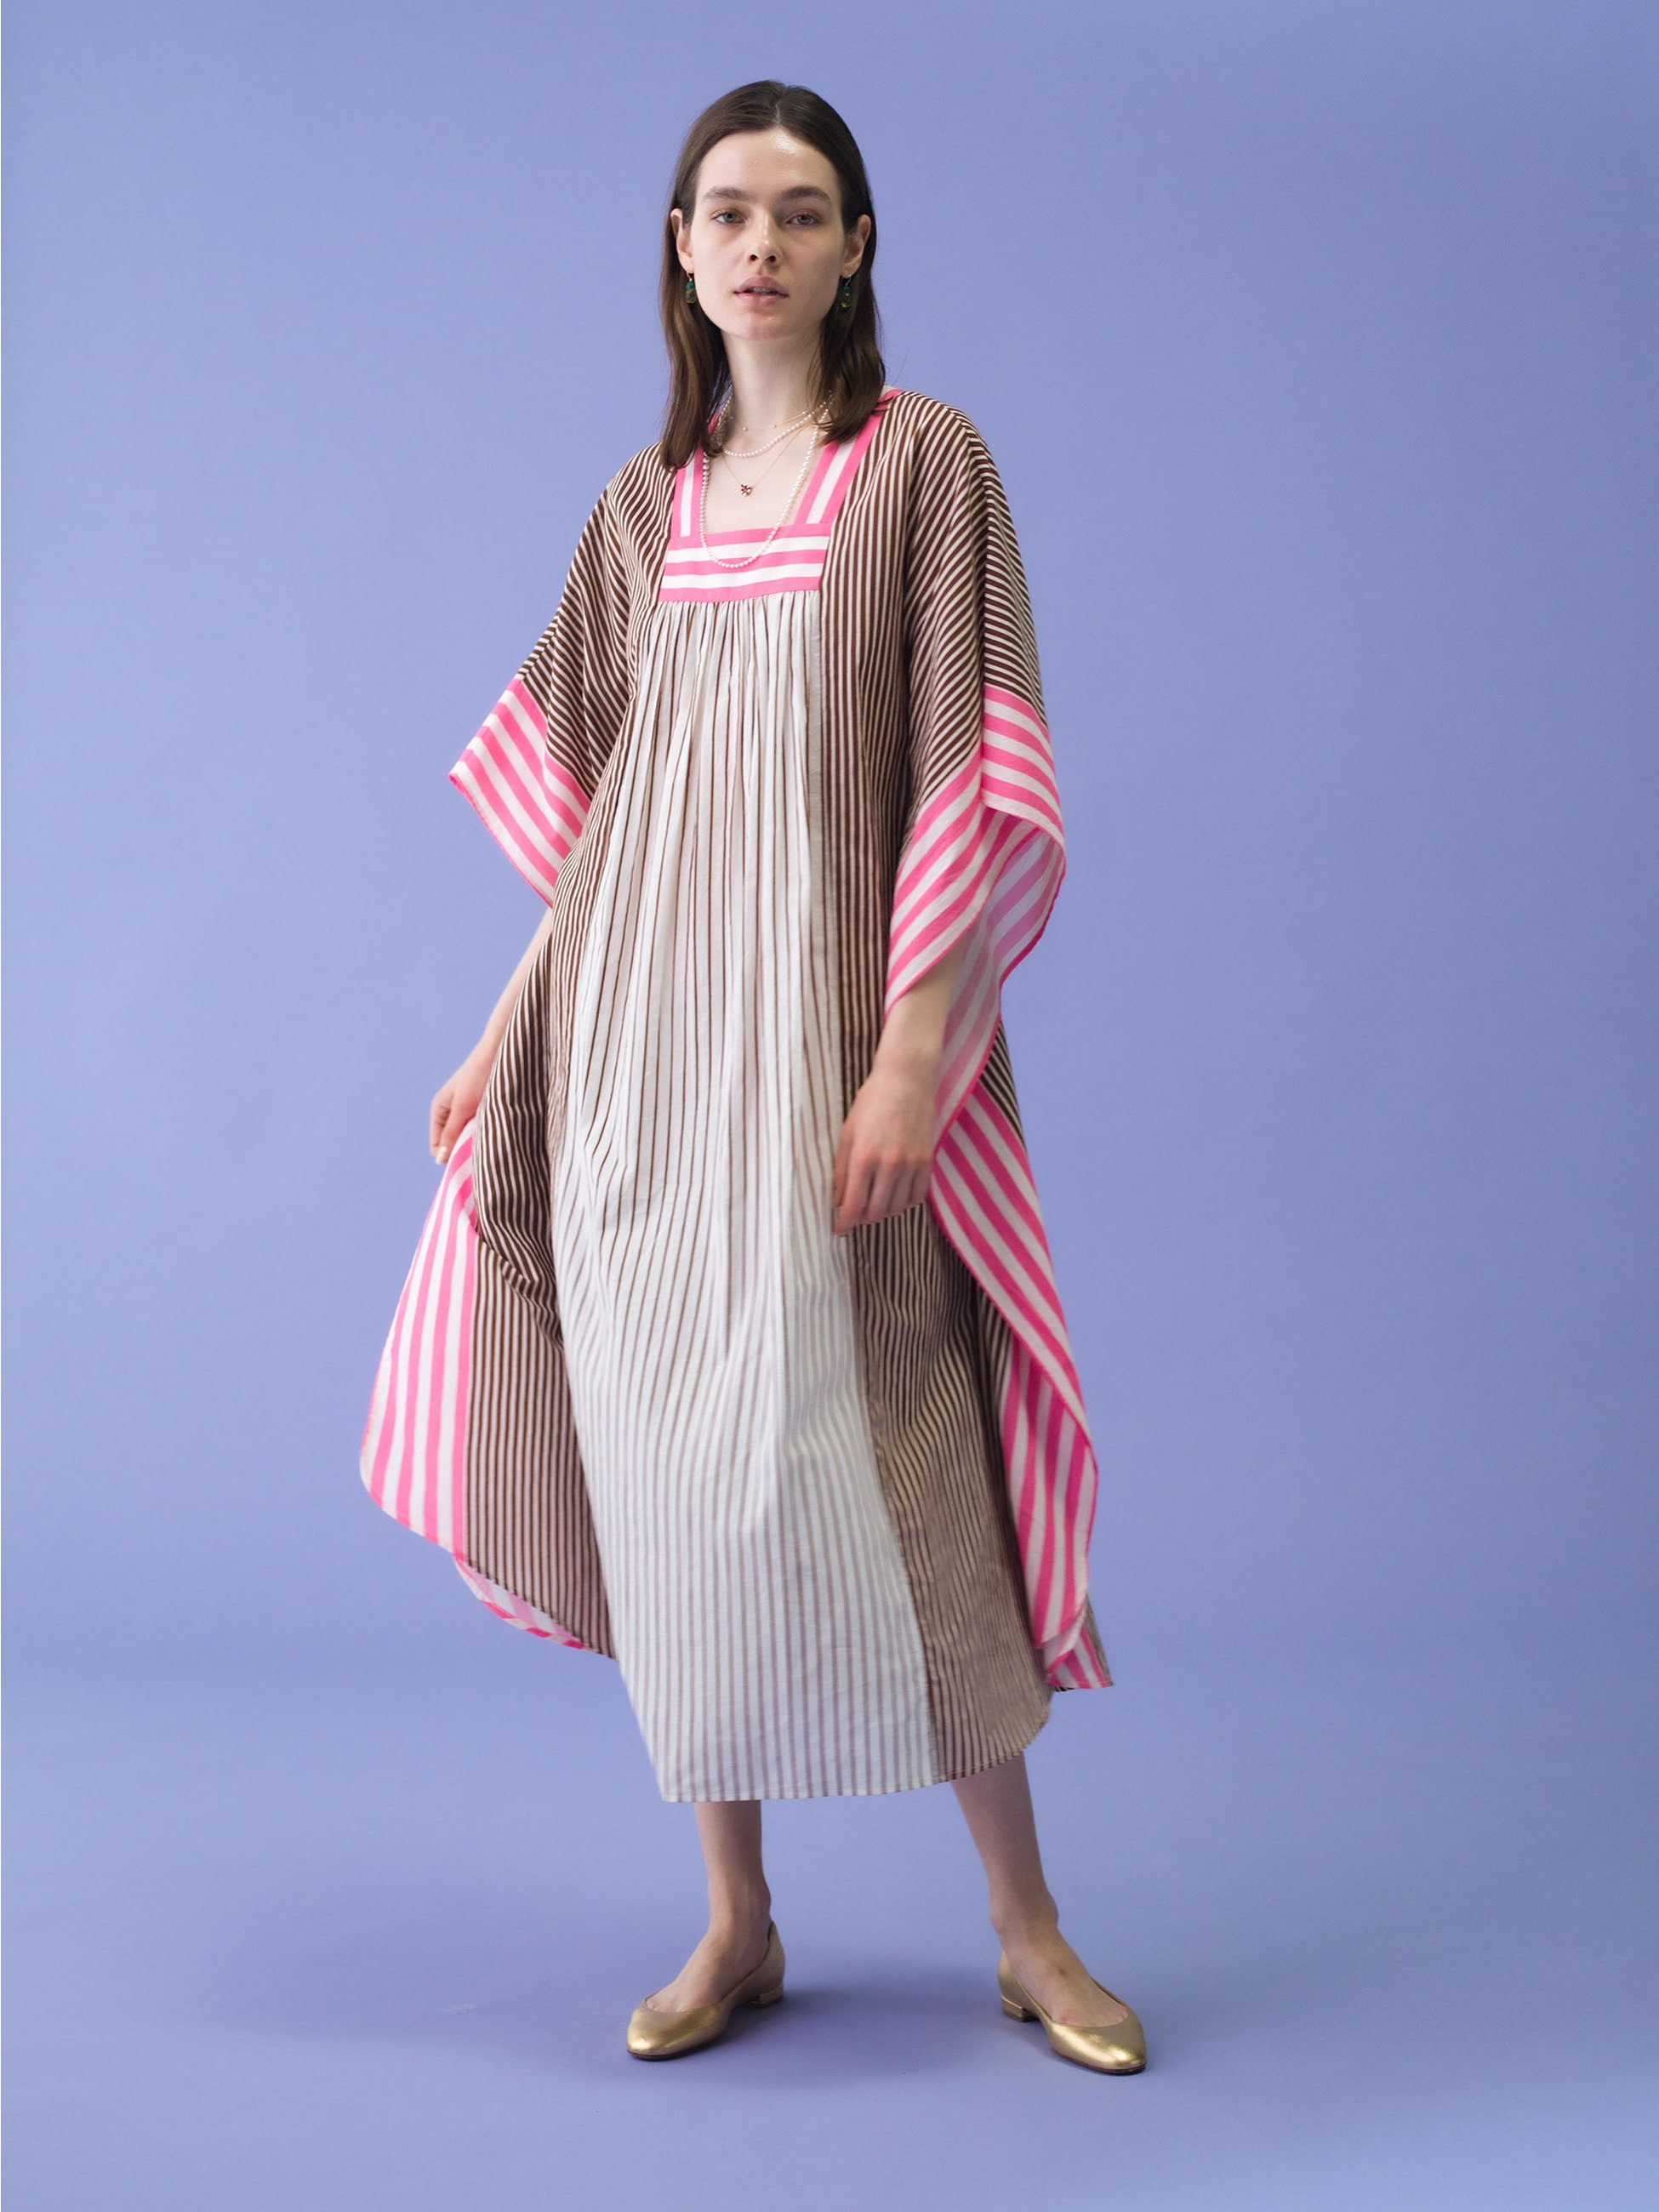 Striped Print Dress